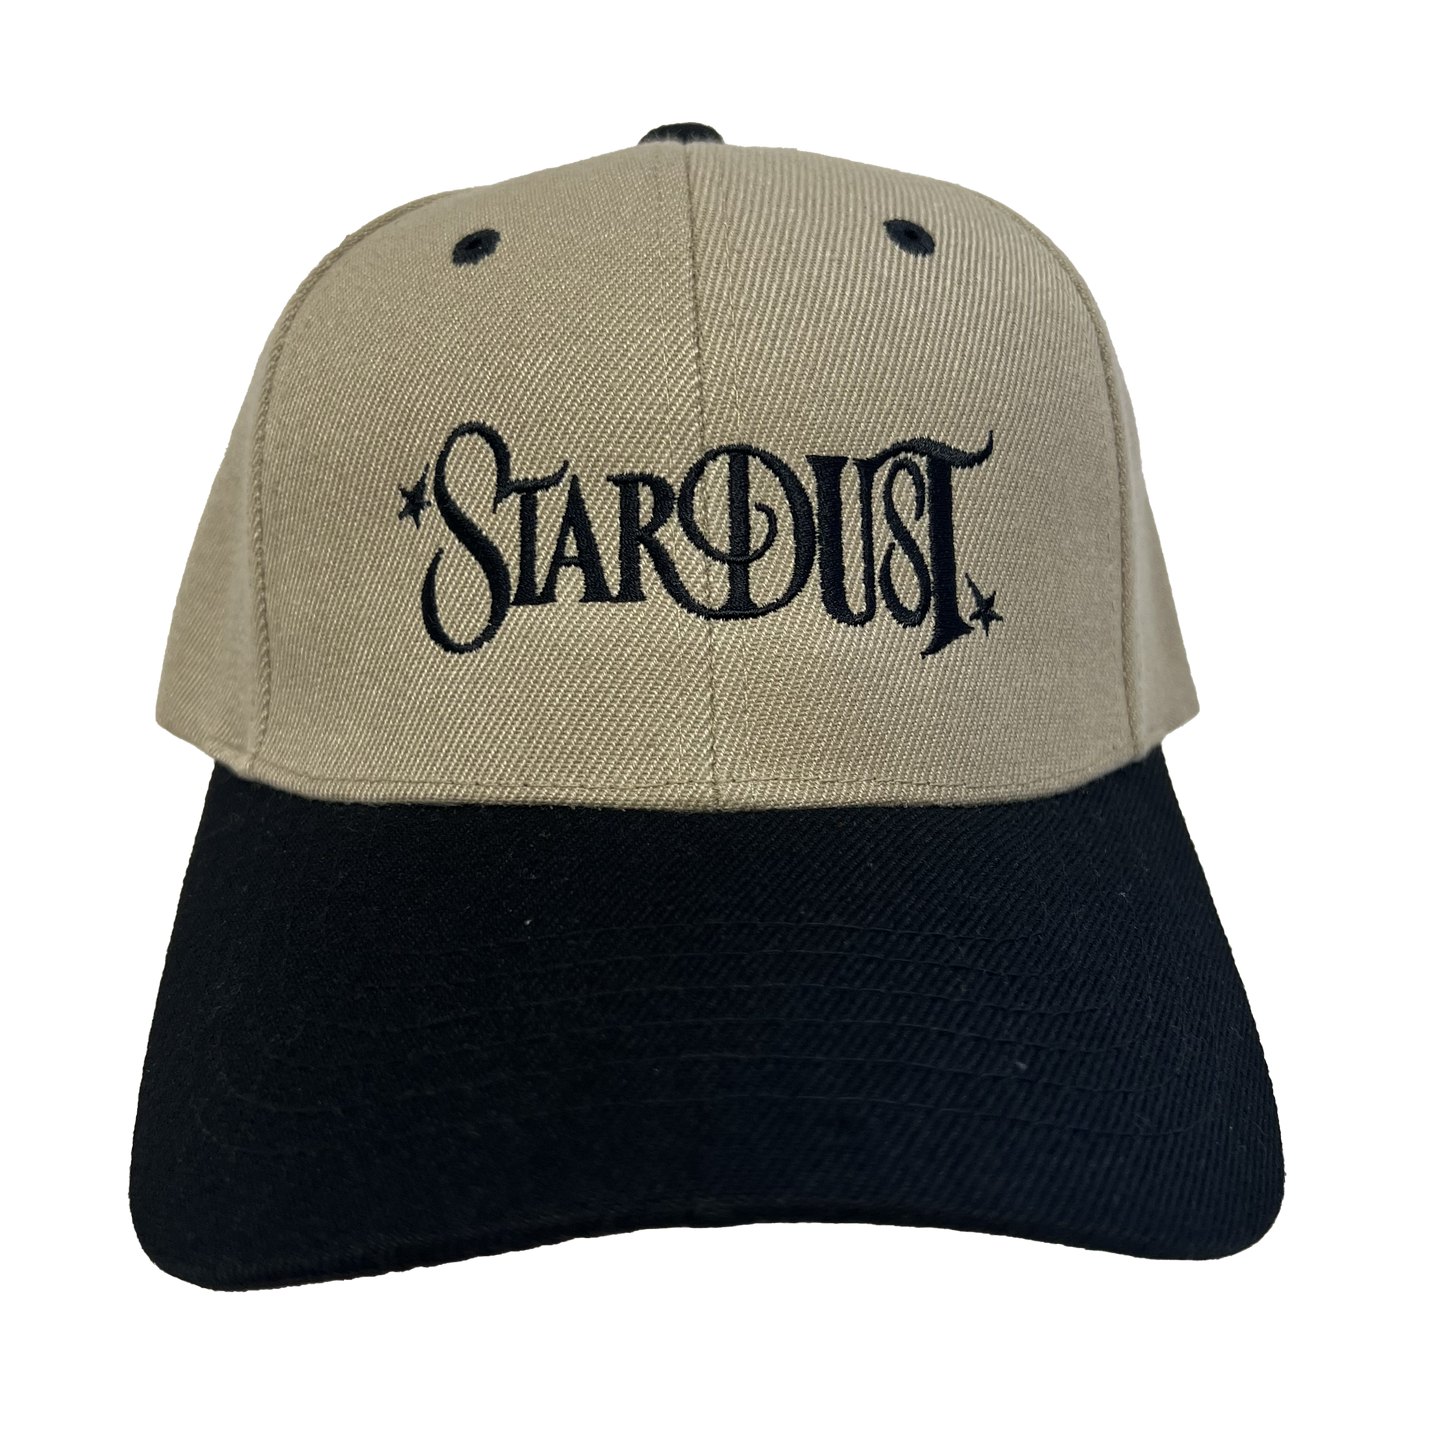 Stardust Wanderlust II Two Tone Dad Hat 004 Khaki / Black / Black